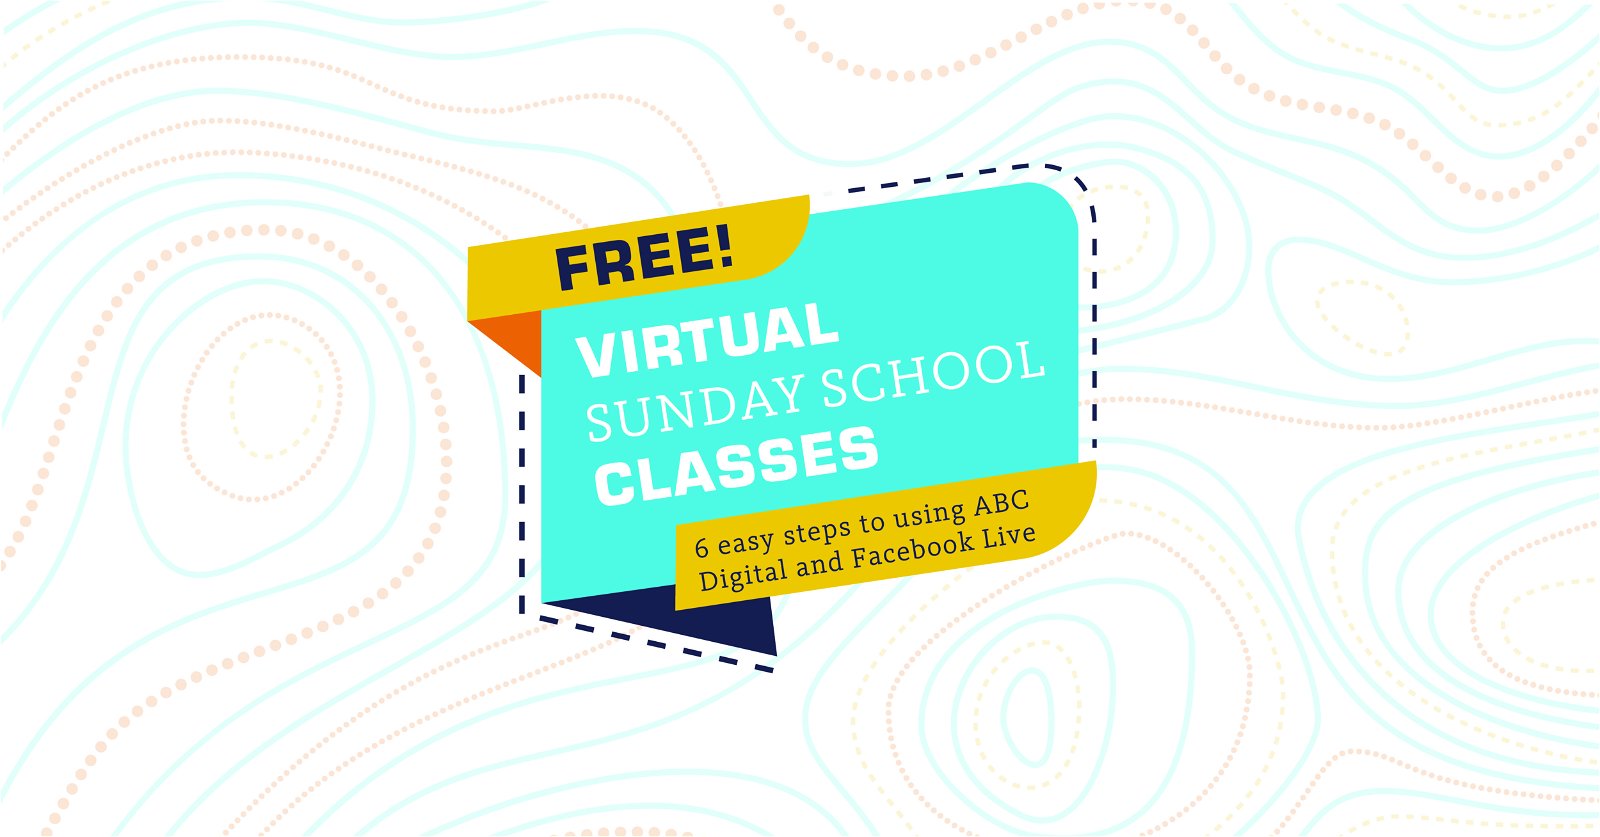 Run a Virtual Sunday School Class for FREE